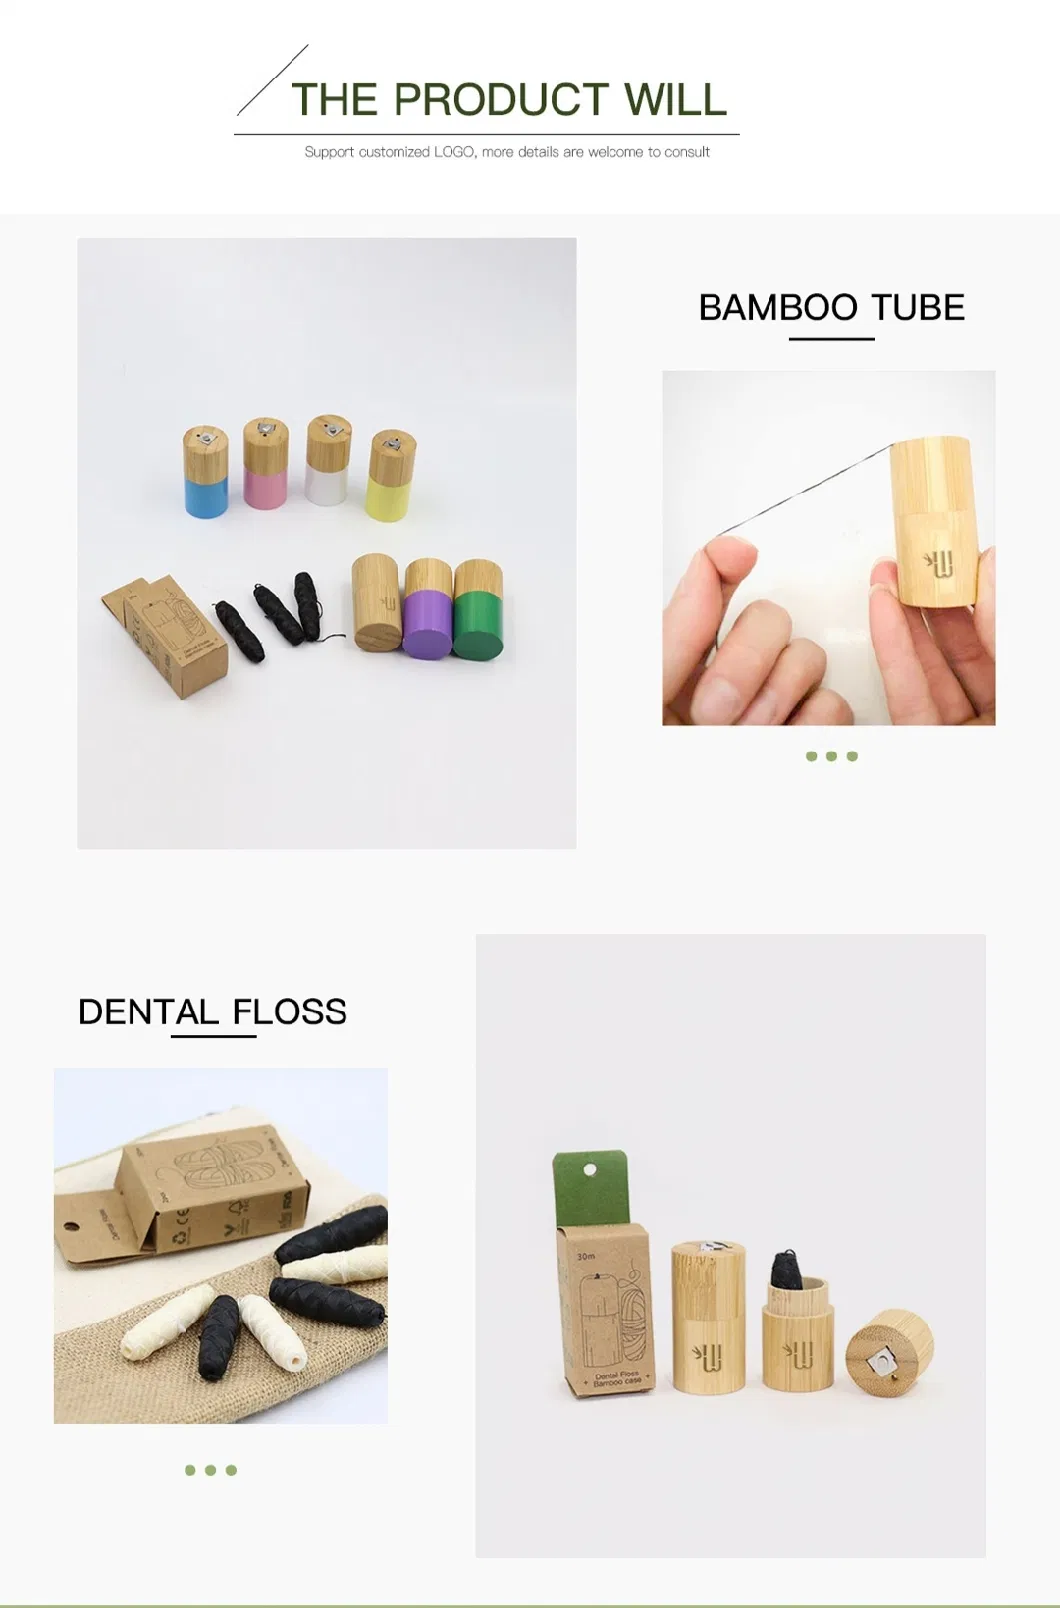 China Wholesale Dental Floss with Natural Colorful Bamboo Tube